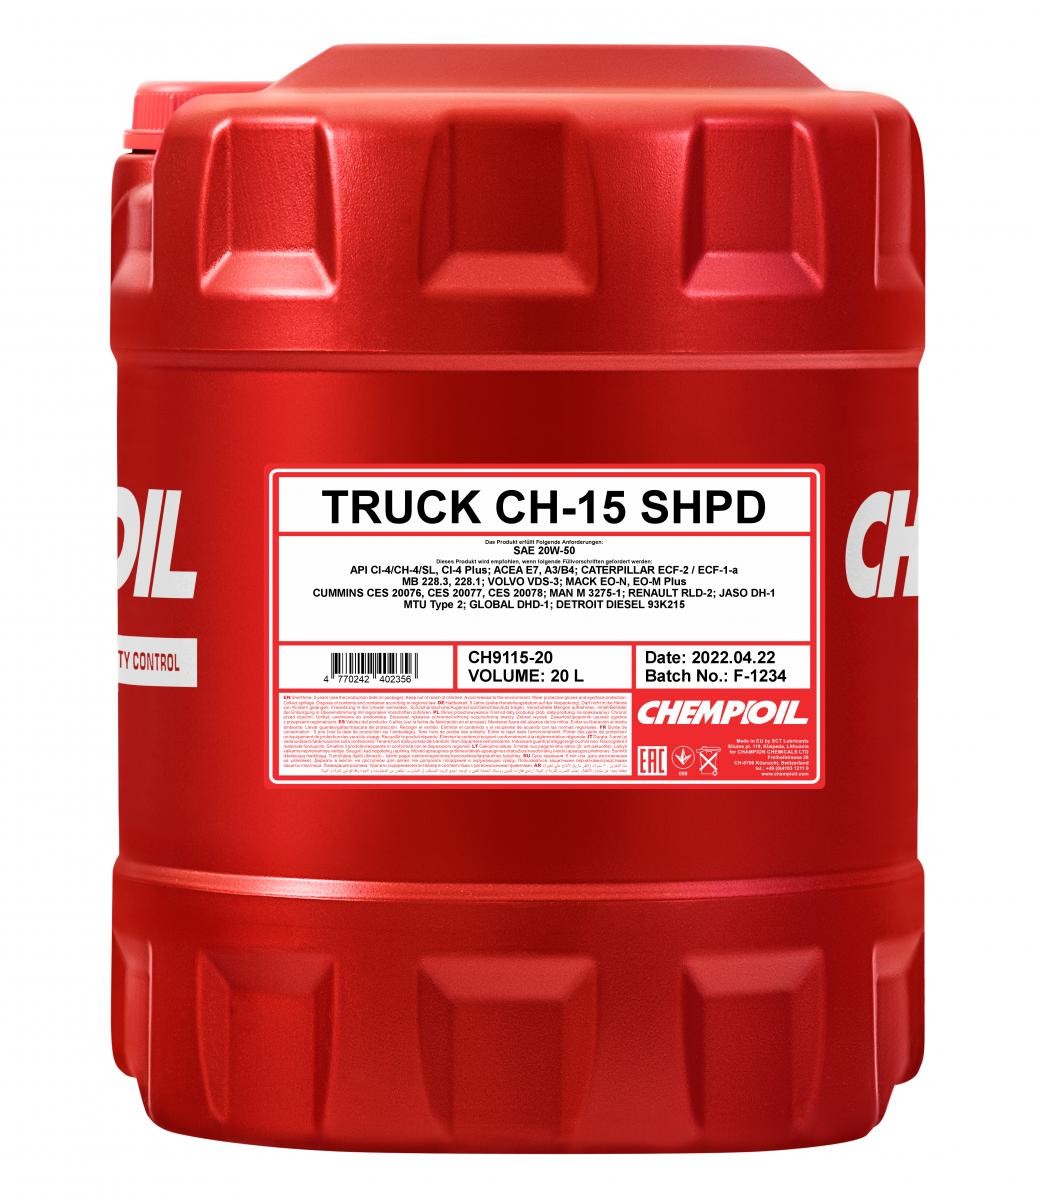 Motor oil Mack EO-M Plus CHEMPIOIL - CH9115-20 Truck, SHPD CH-15